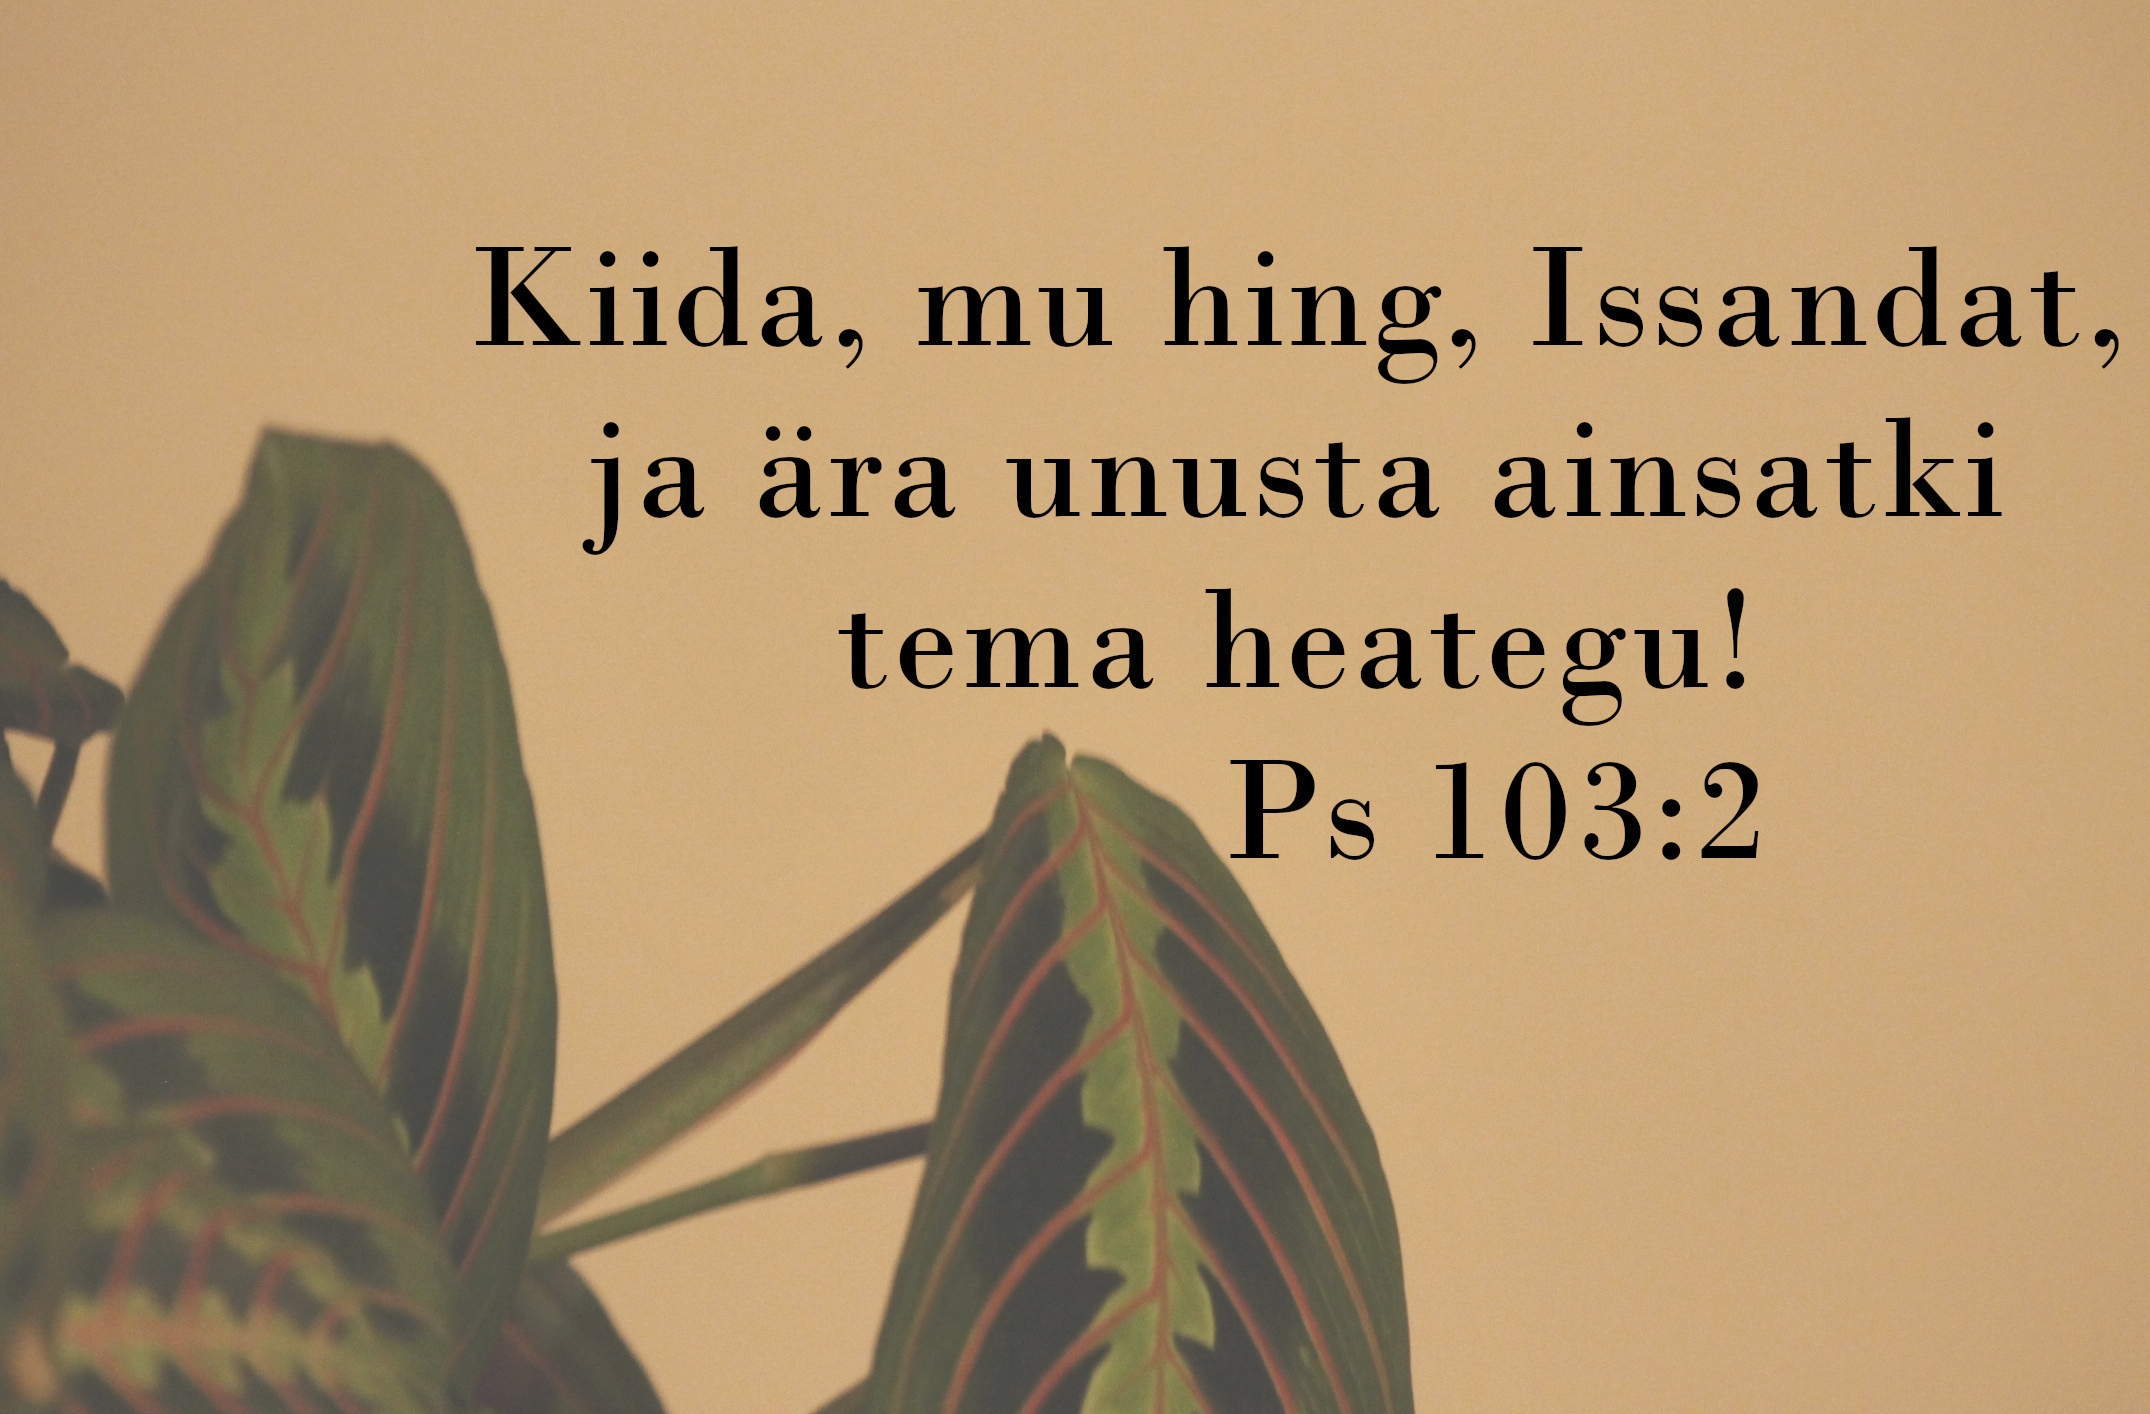 pIIBEL: pSALM 103:2